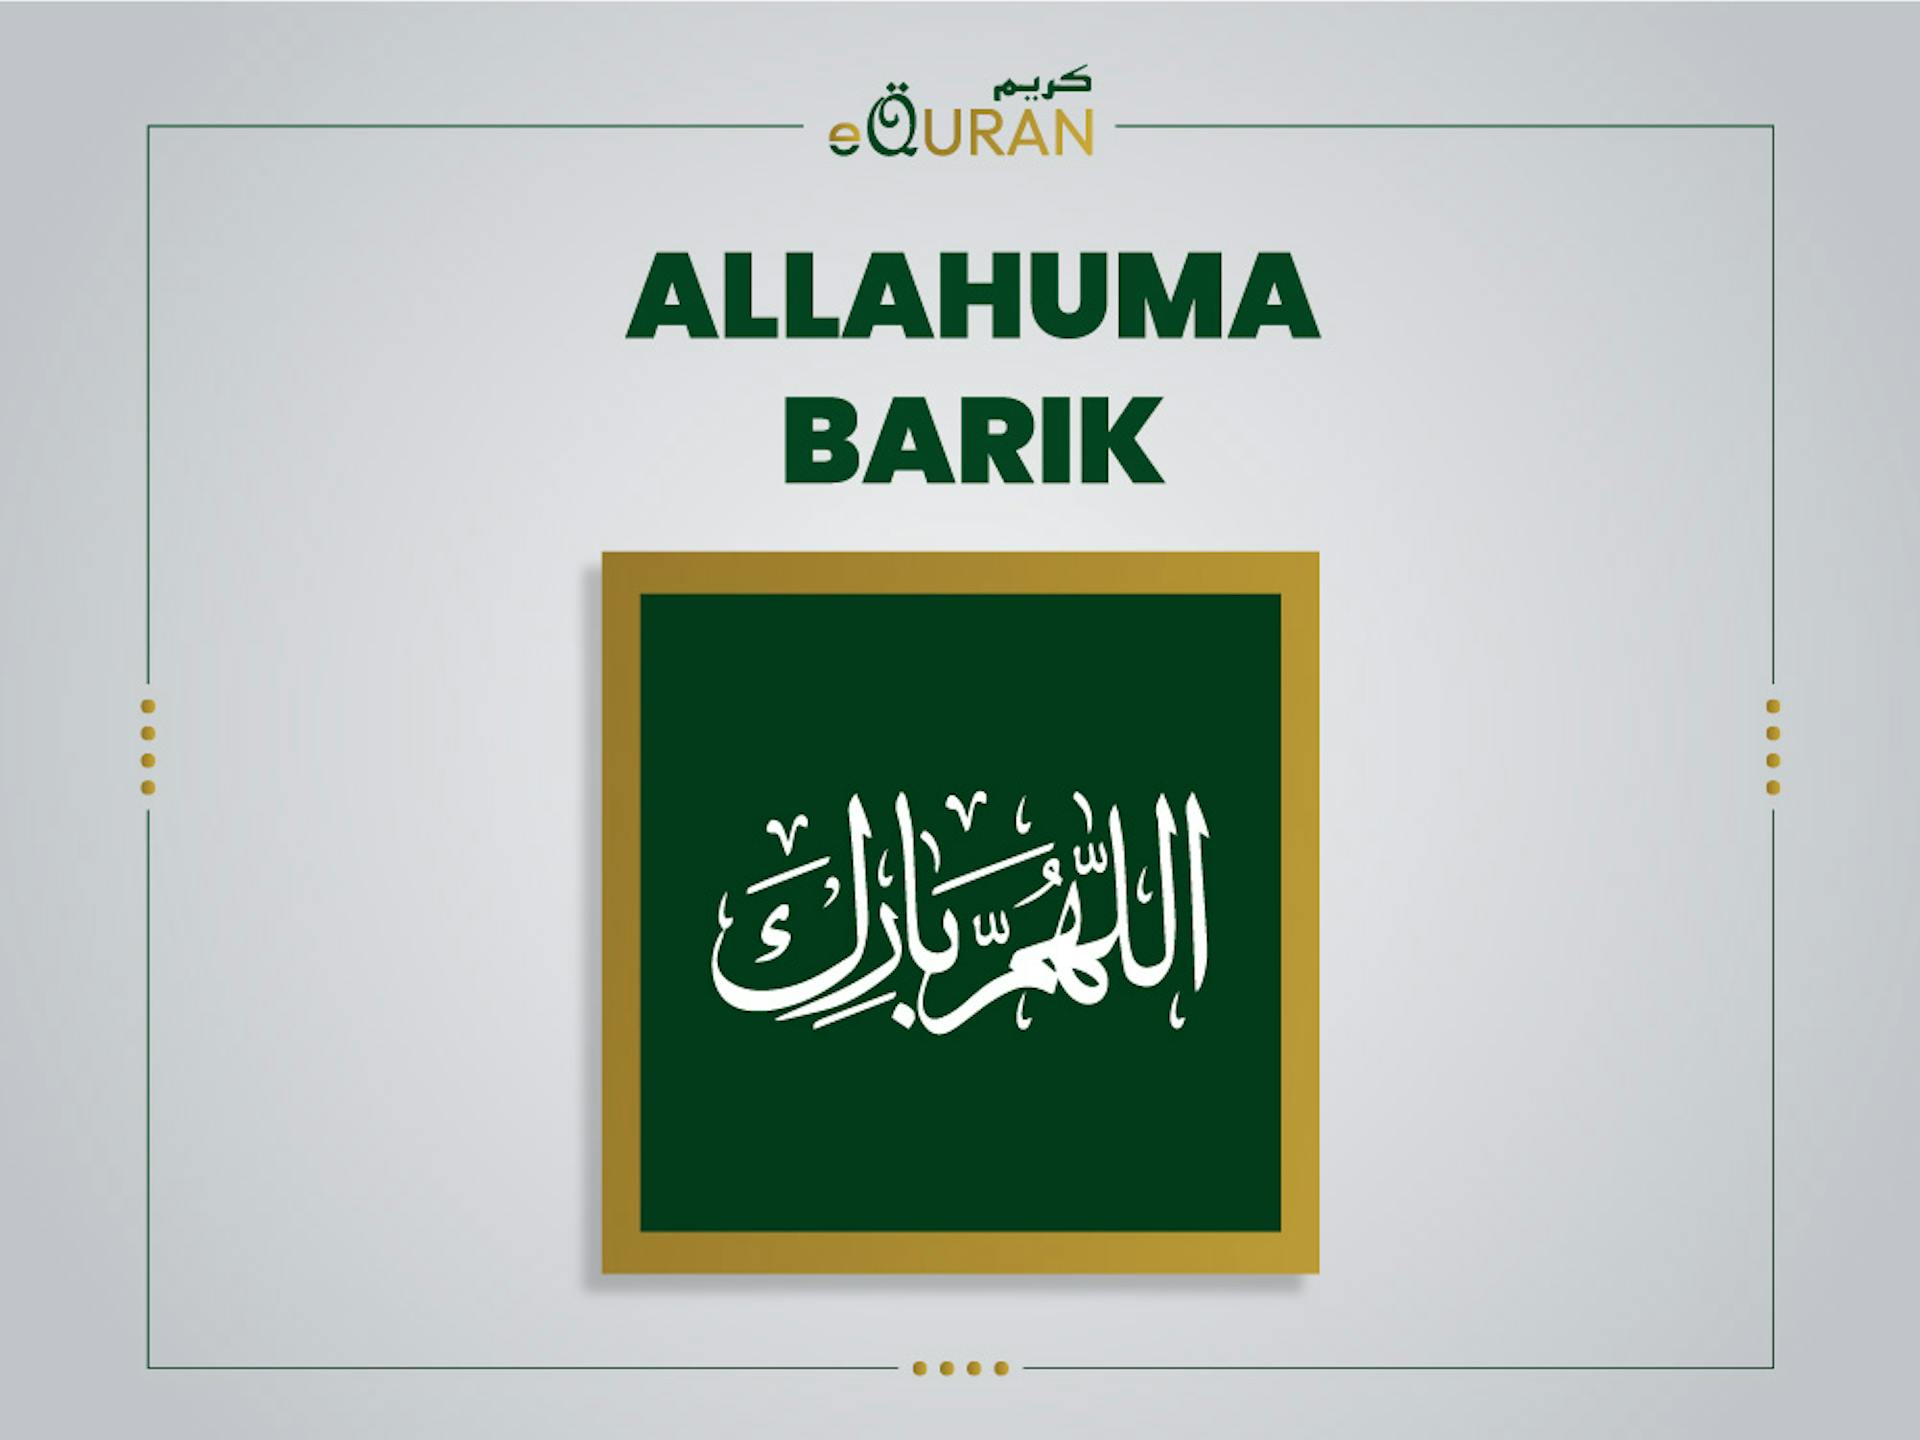 Allahumma Barik in Arabic meaning and reply to allahumma barik